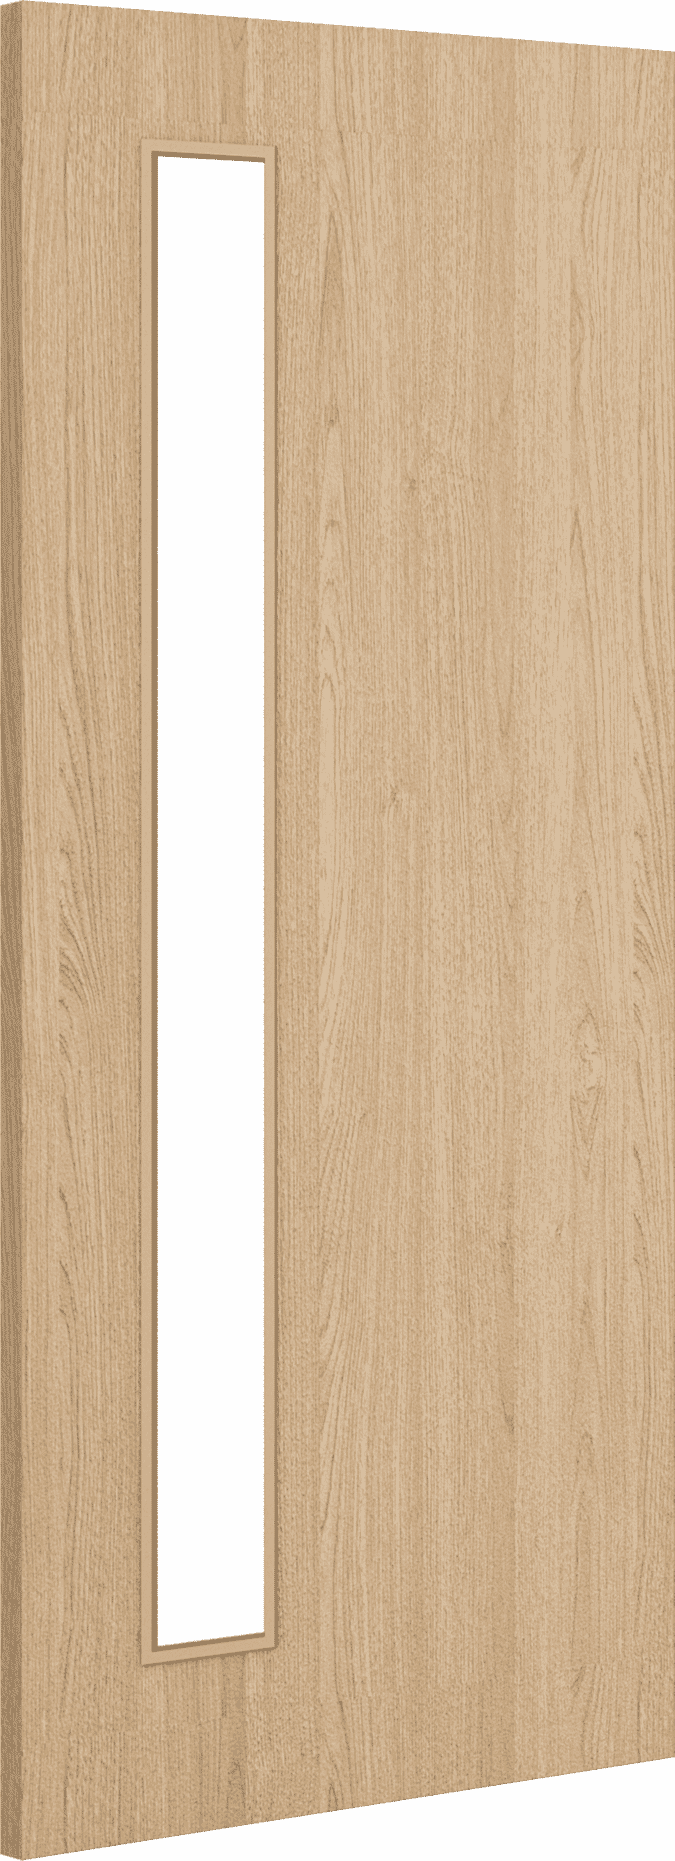 2040mm x 626mm x 44mm Architectural Oak 06 Frosted Glazed - Prefinished FD30 Fire Door Blank